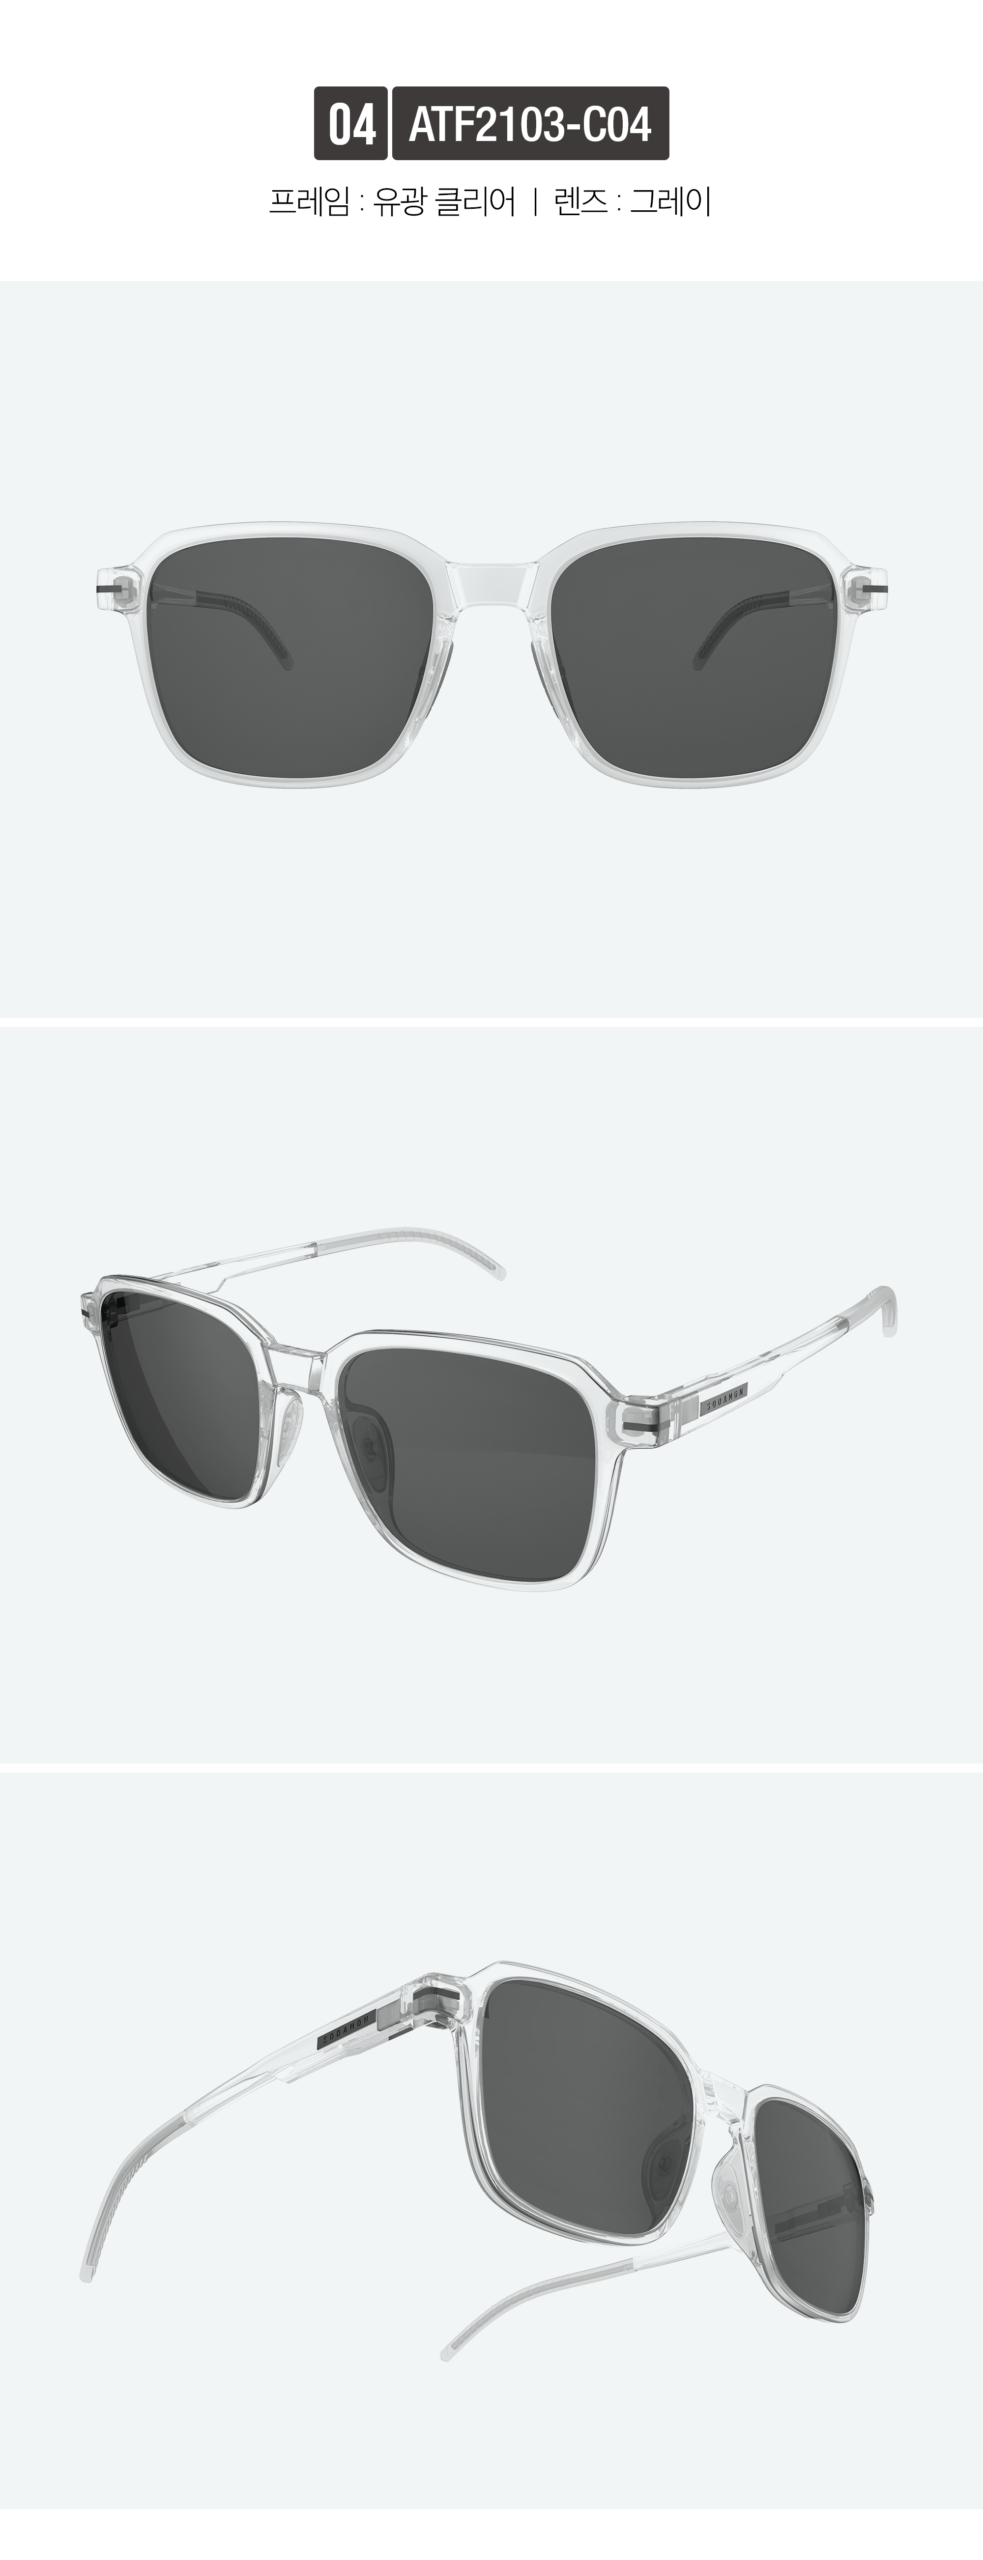 Sodamon Attem Fit ATF2103 Near-Infrared Blocking Sunglasses